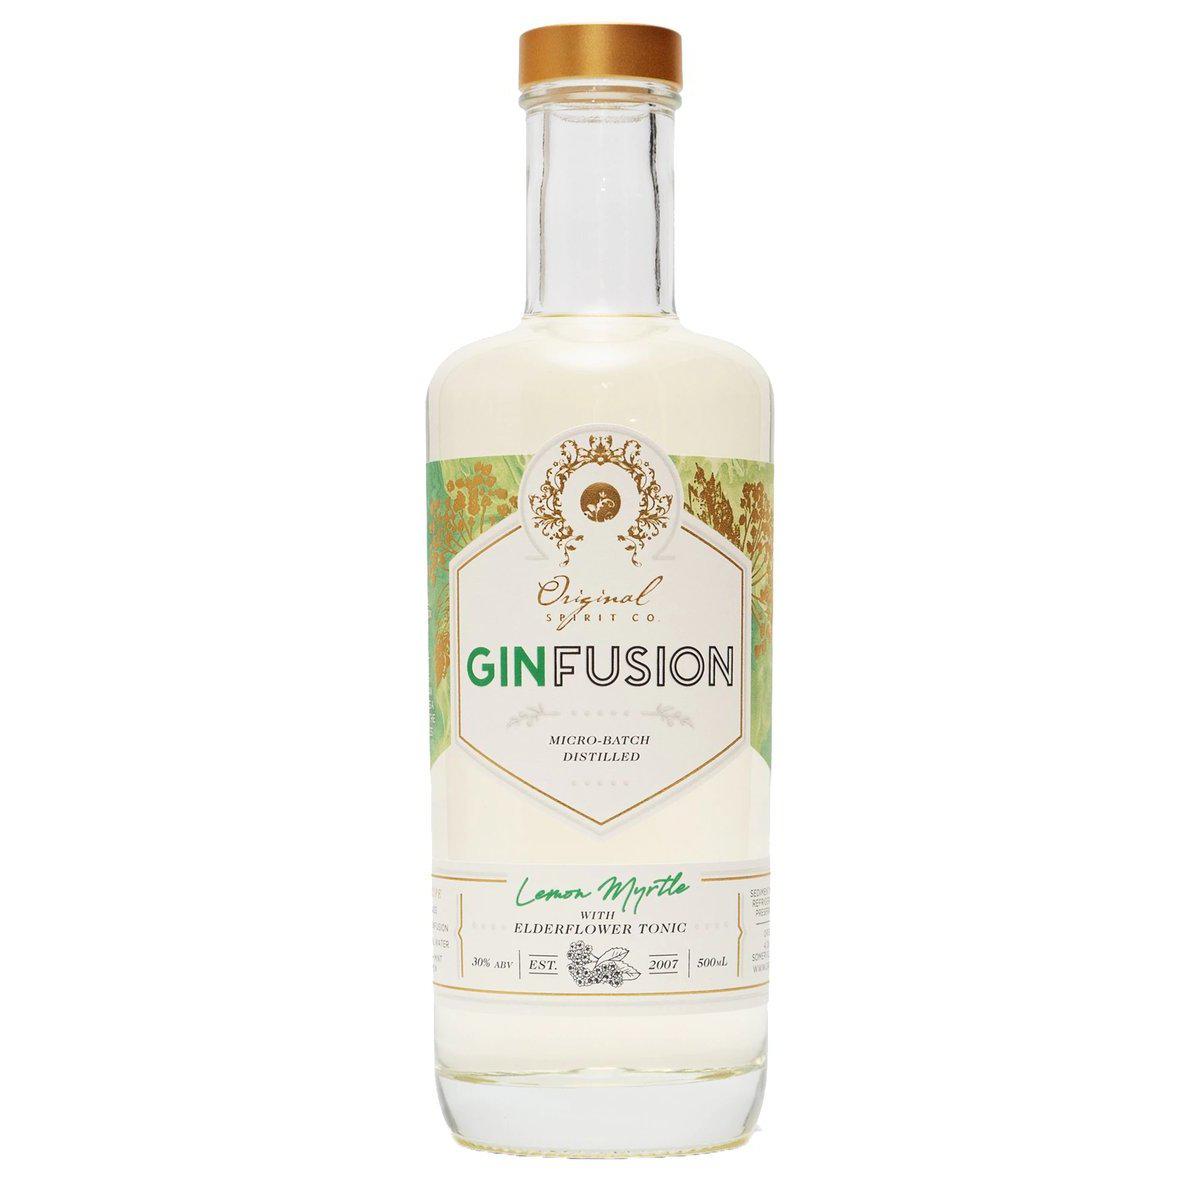 Original Spirits Co GinFusion Lemon Myrtle Elderflower Tonic 500ml